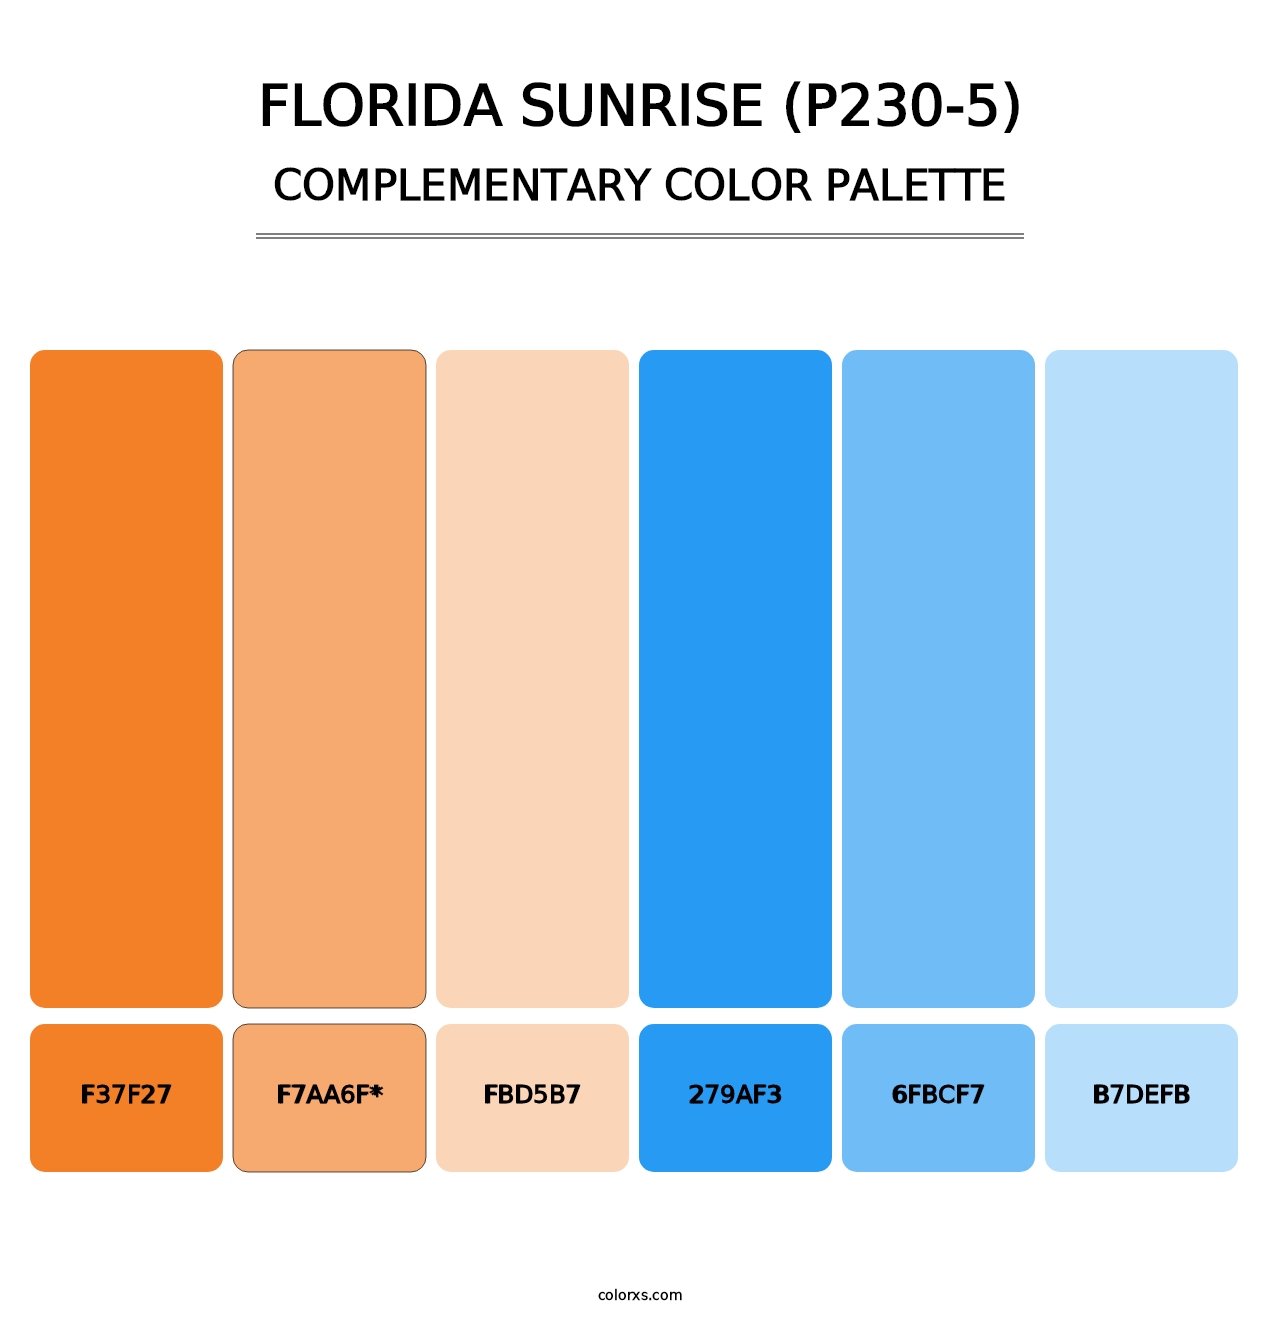 Florida Sunrise (P230-5) - Complementary Color Palette